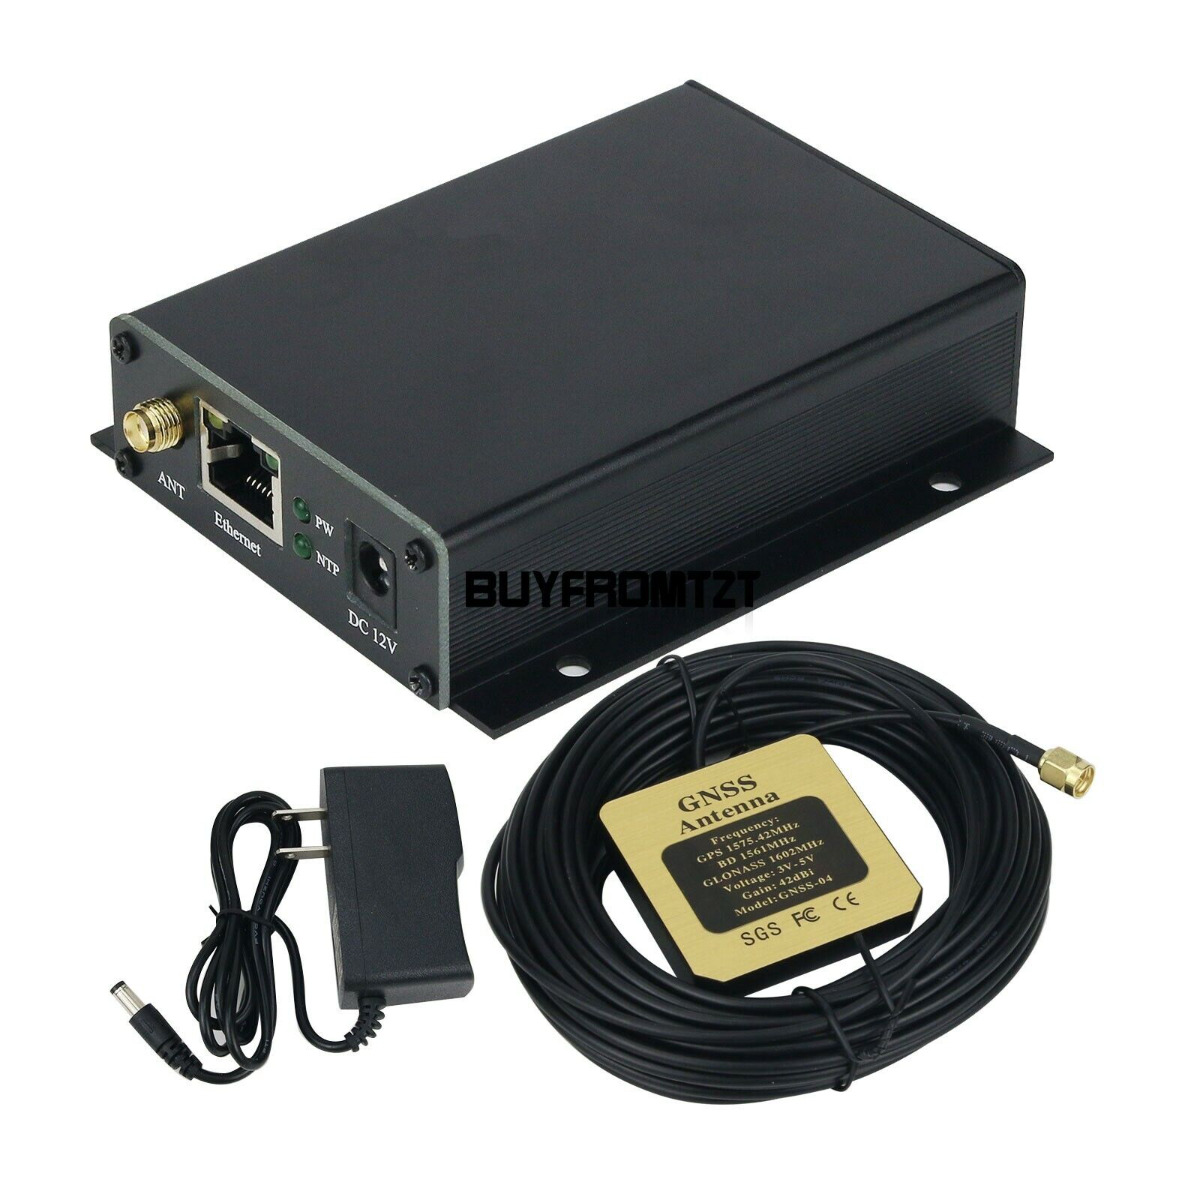 FC-NTP-MINI NTP Server Network Time Server w/1 Ethernet Port For GPS Beidou QZSS